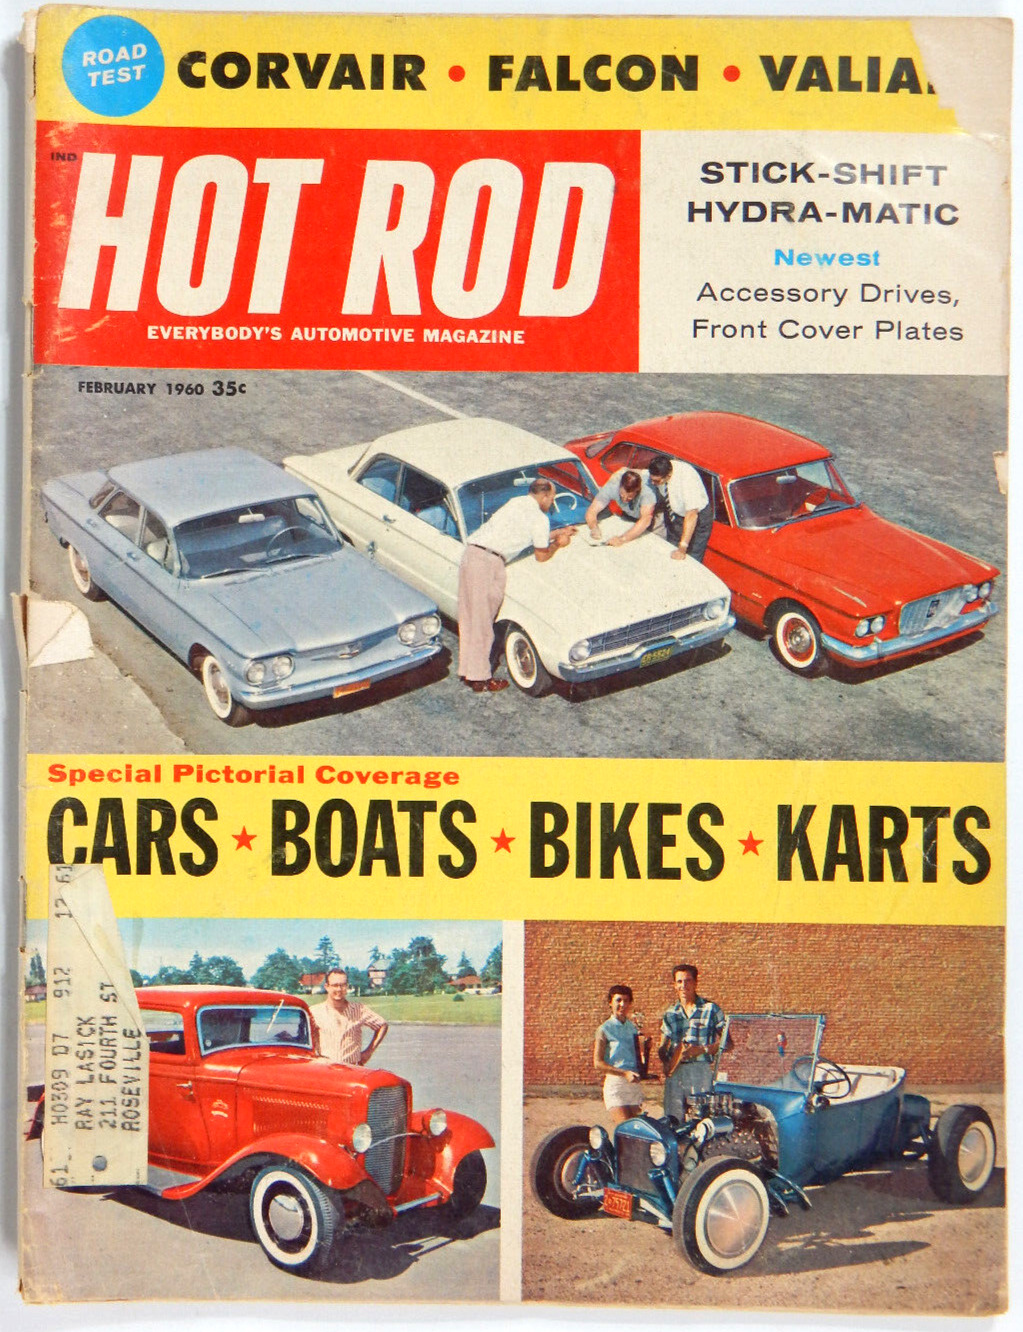 VTG HOT ROD AUTOMOTIVE MAGAZINE FEBRUARY 1960 HYDRA-MATIC CARS BOATS BIKES KARTS